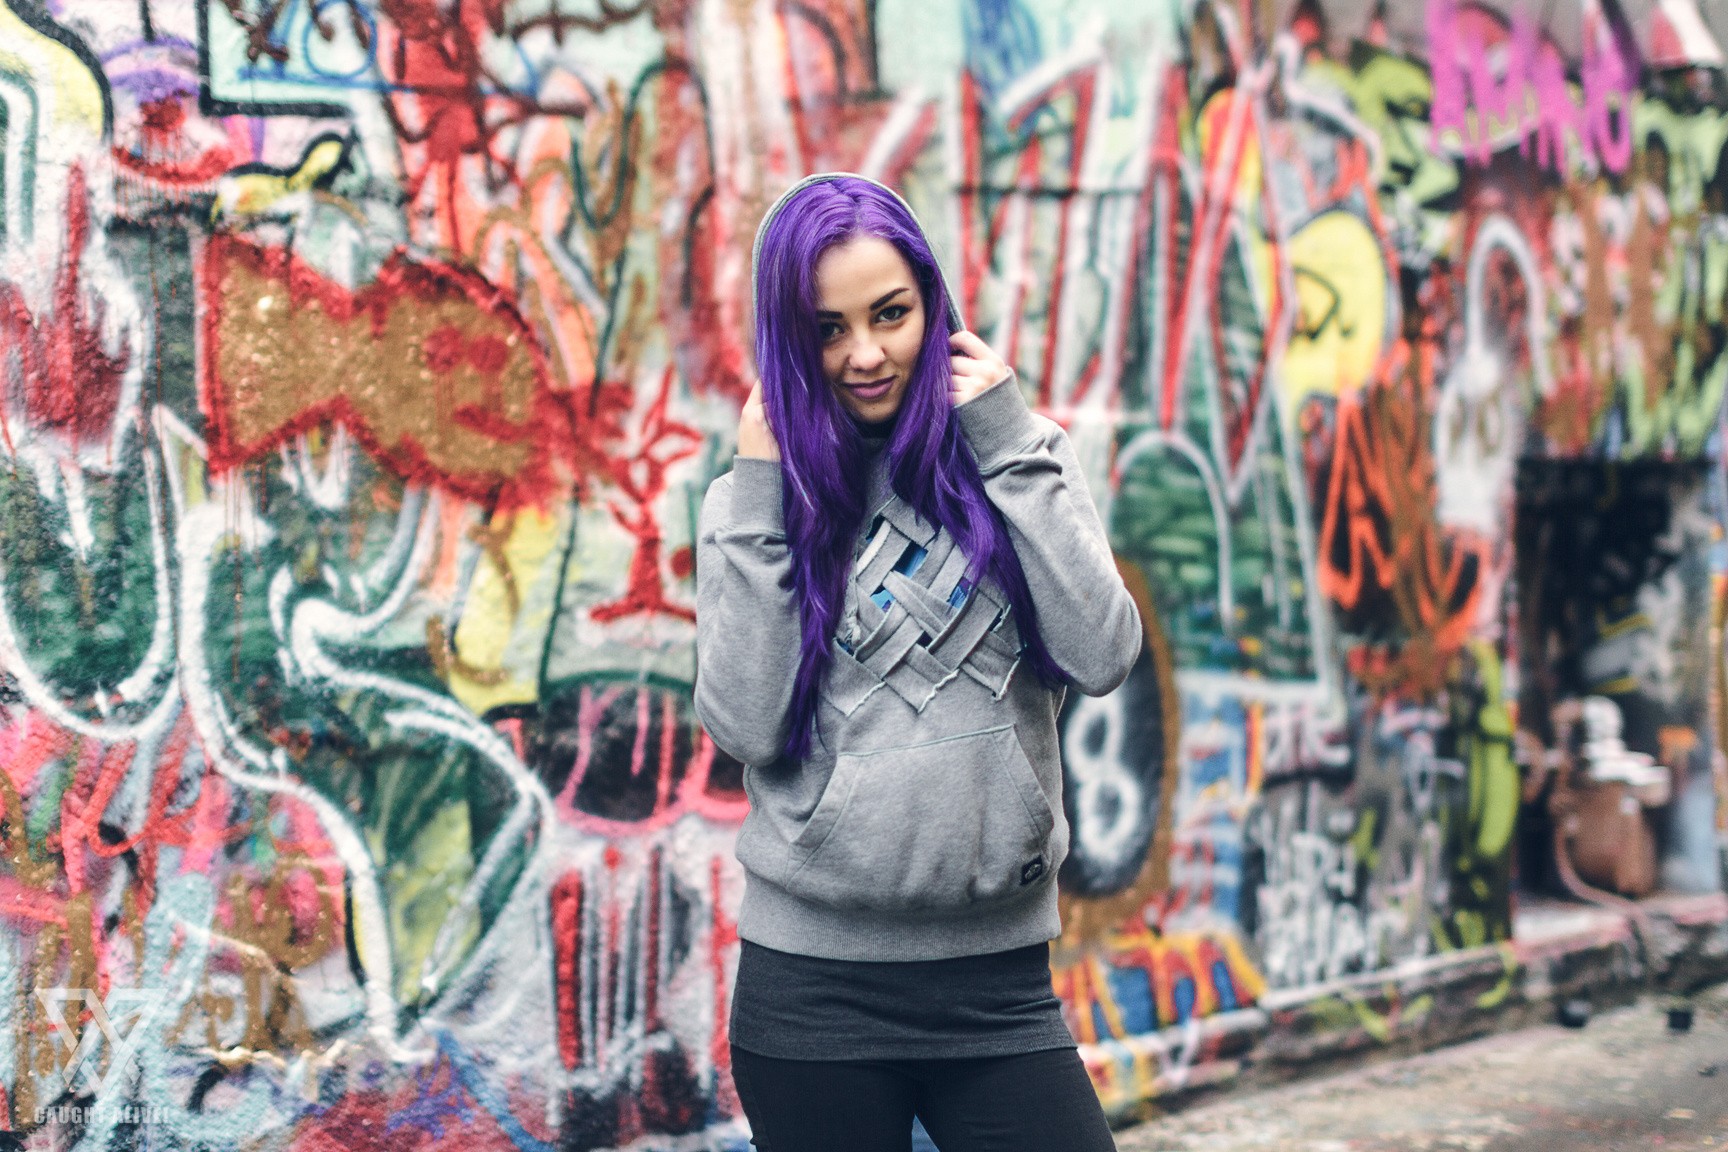 People 1728x1152 women colorful purple hair hoods women outdoors urban graffiti wall model sweatshirts